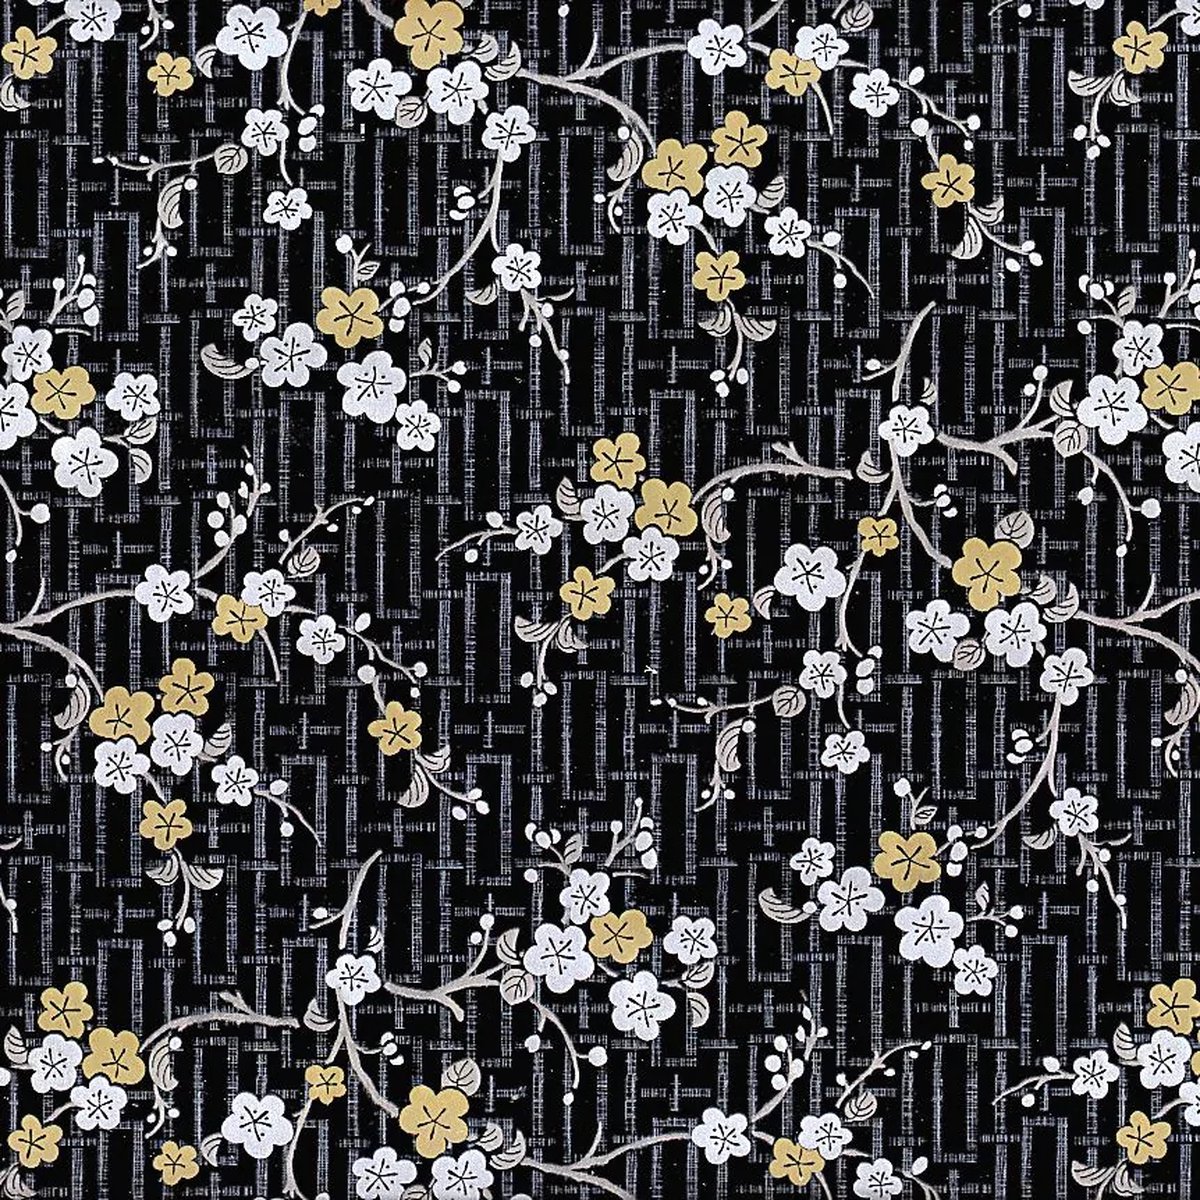 Decoratie plakfolie Oriental Blossom zwart 45 cm x 2 meter zelfklevend - Decoratiefolie - Meubelfolie